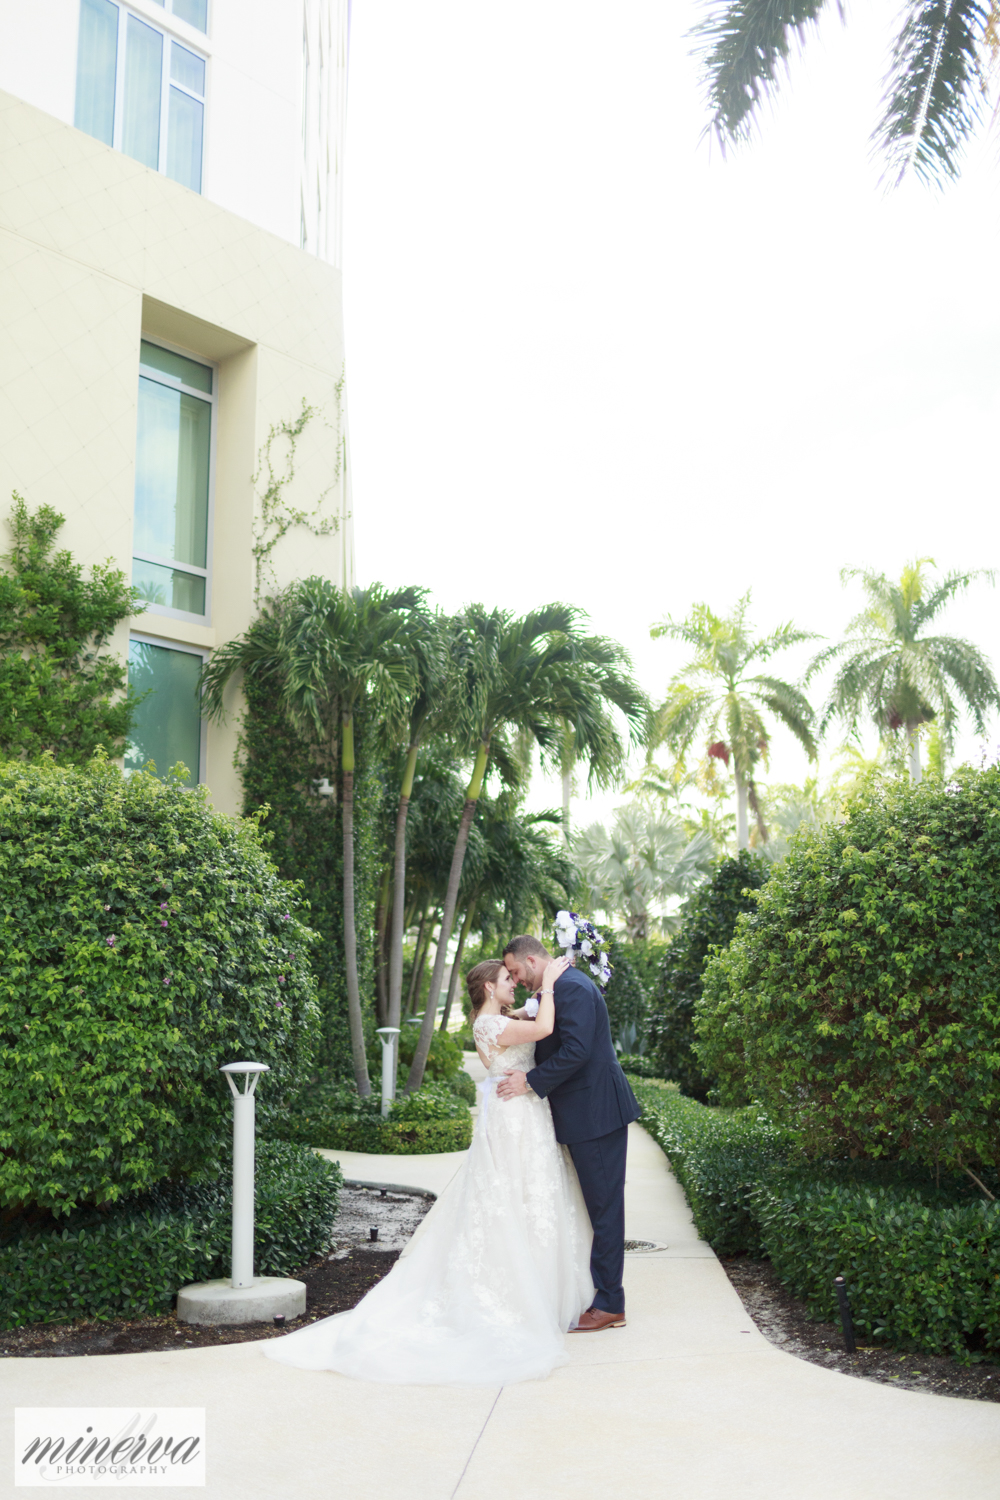 047_wedding-photography_hilton-west-palm-beach_hotel-ballroom-photographer_orlando-videographer